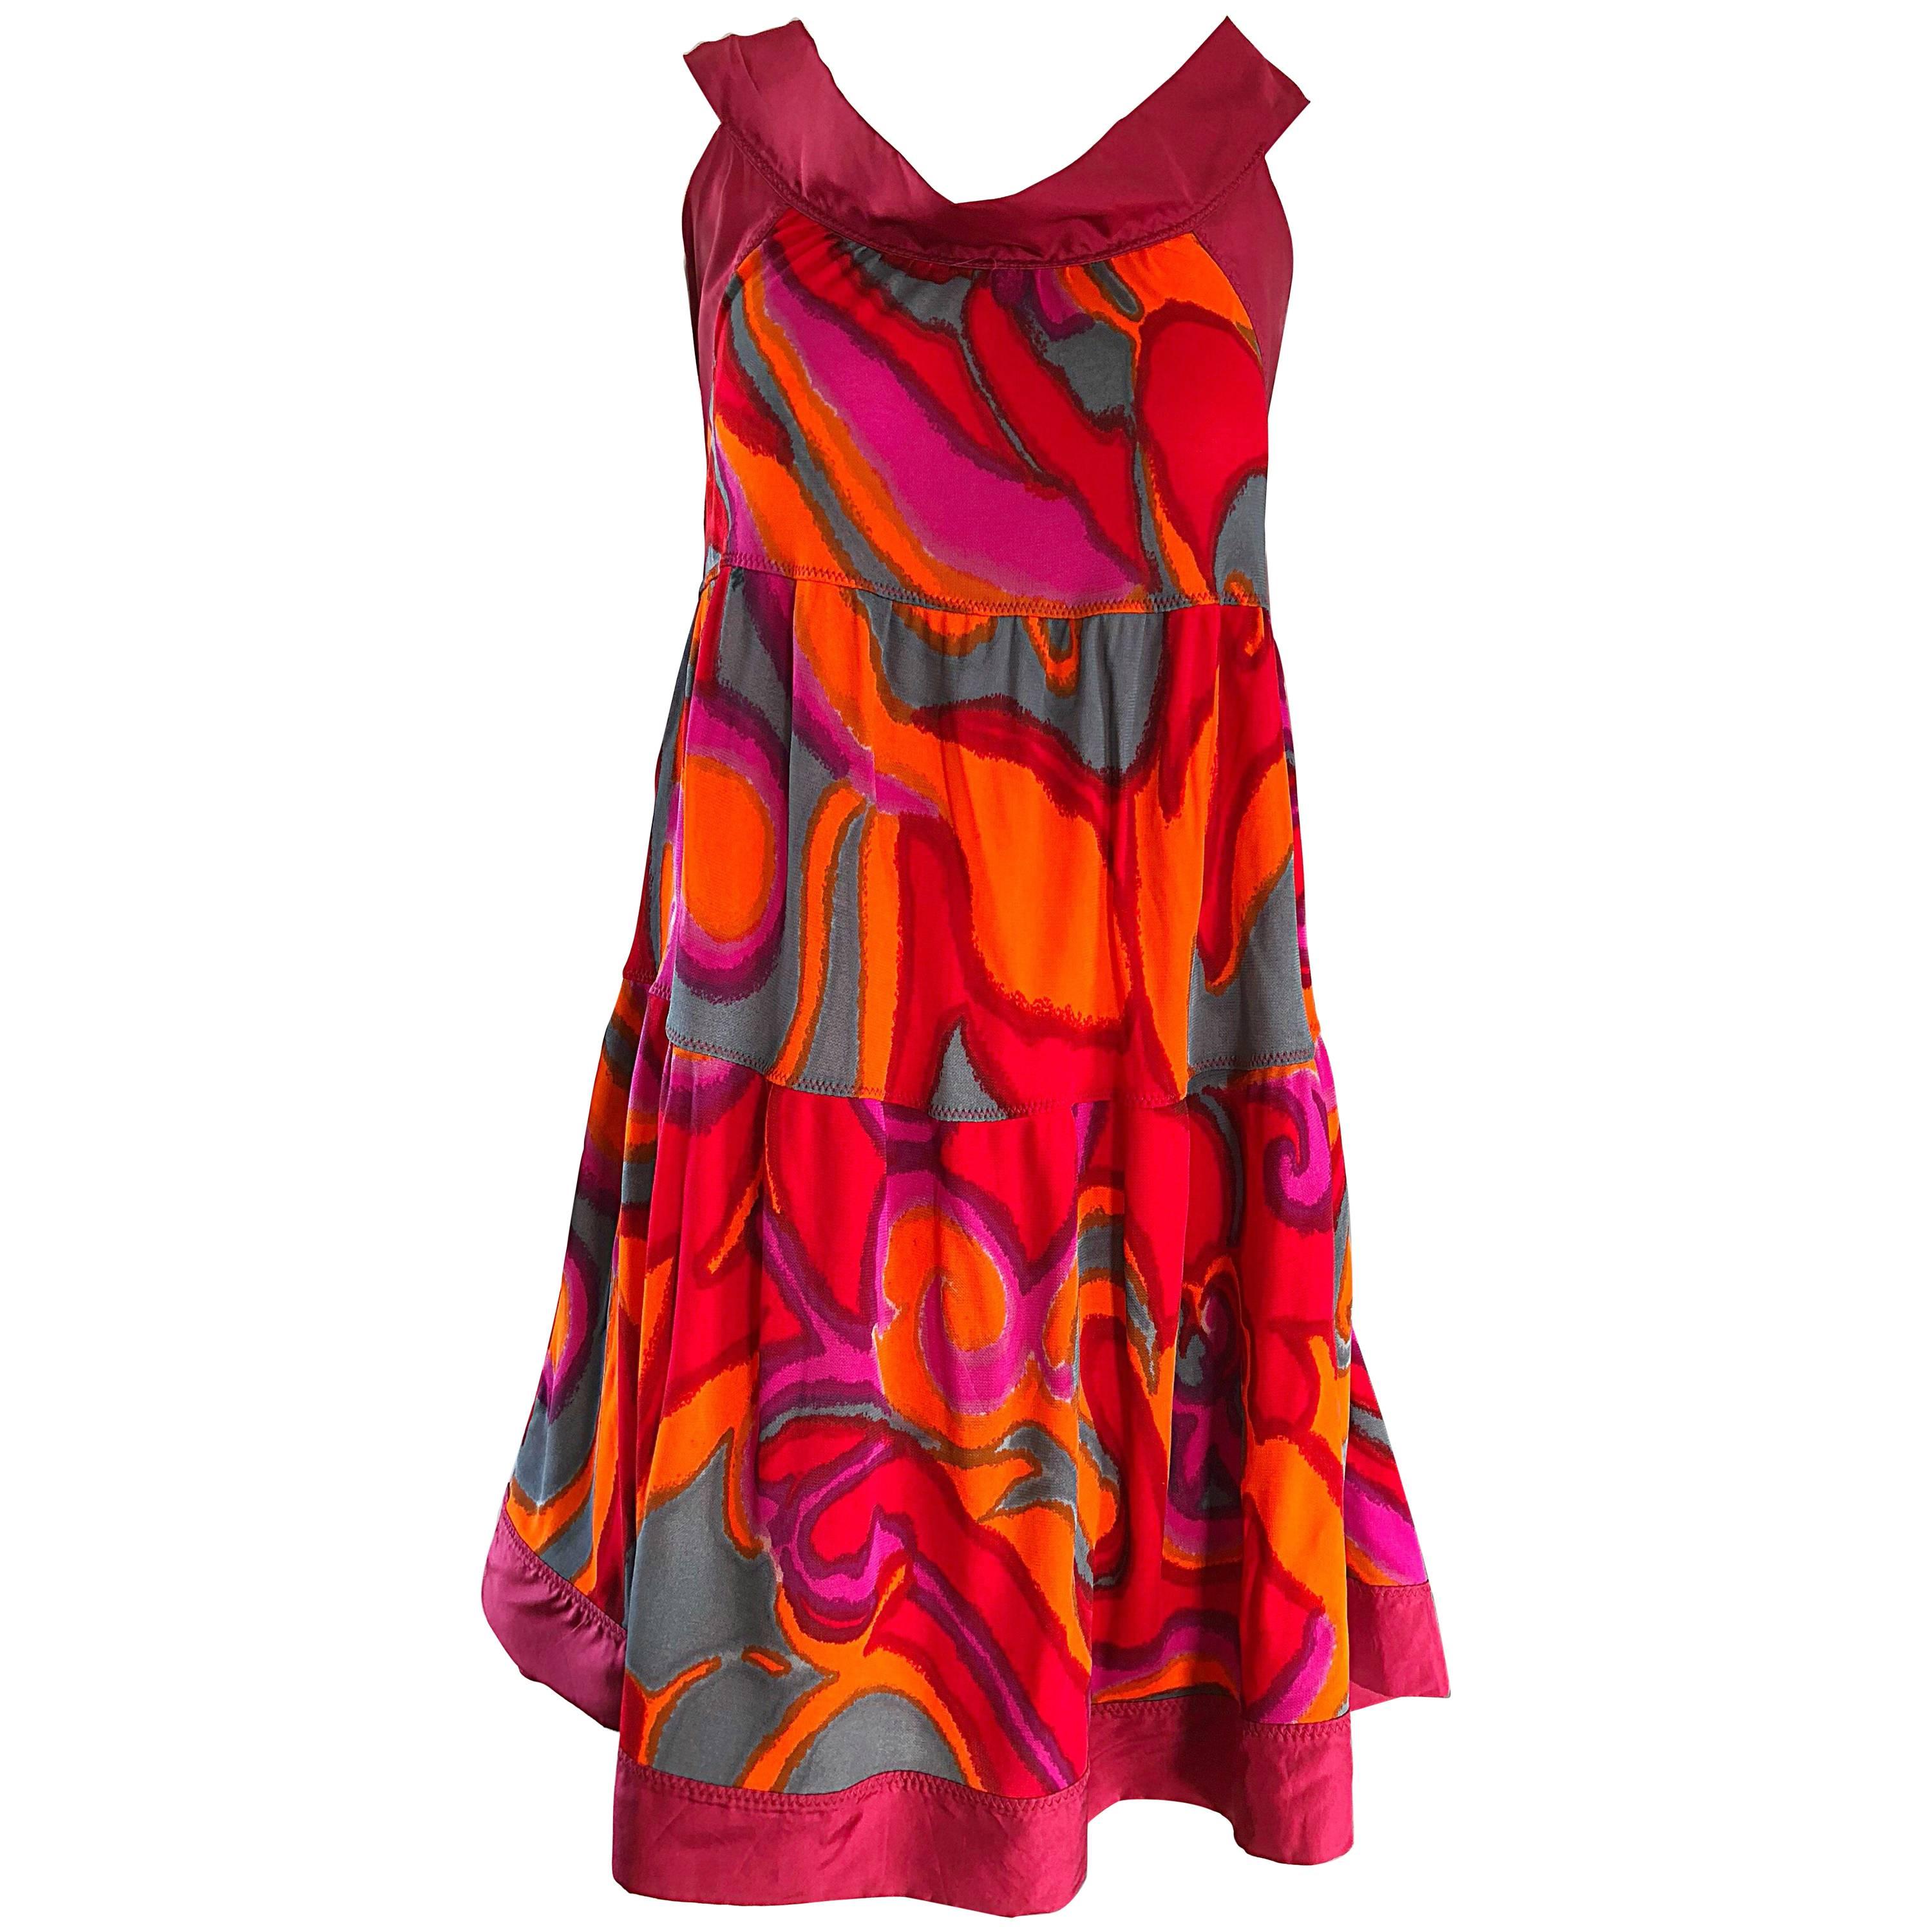 Missoni 1990s Hot Pink + Neon Orange + Gray Silk Jersey Vintage Trapeze Dress